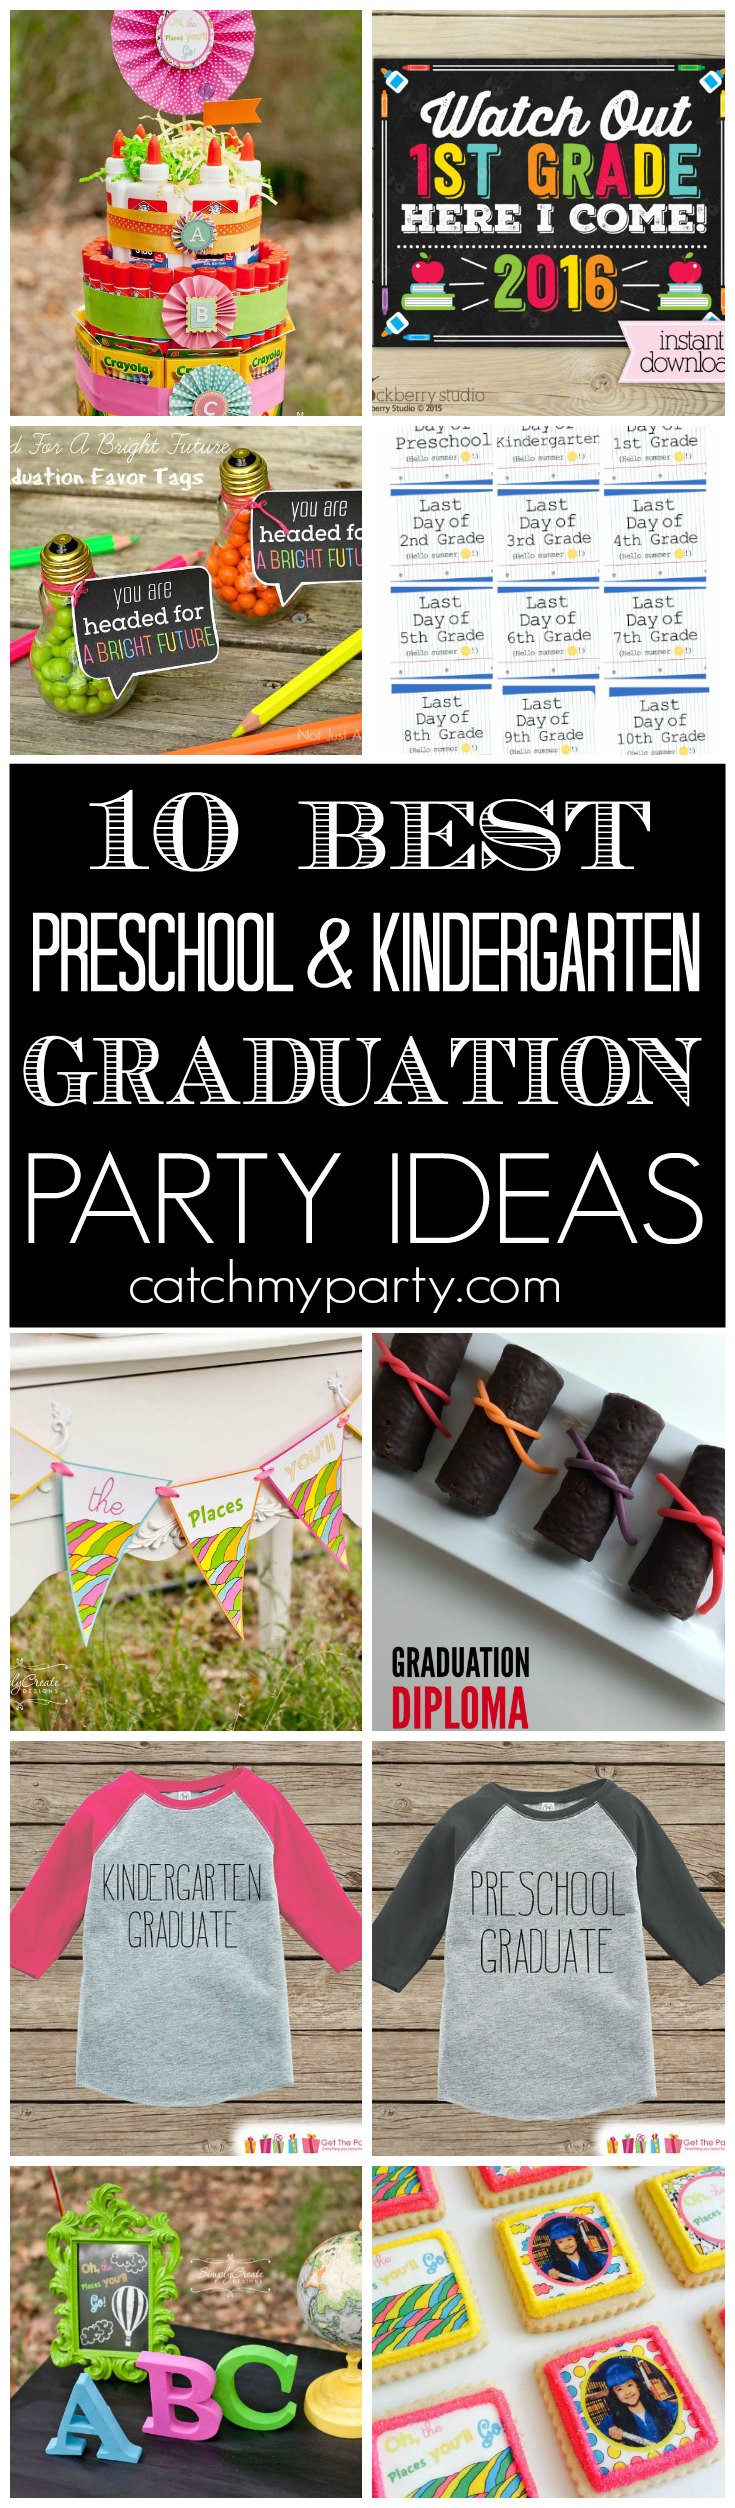 Kindergarden Graduation Party Ideas
 10 Best Preschool & Kindergarten Graduation Party Ideas